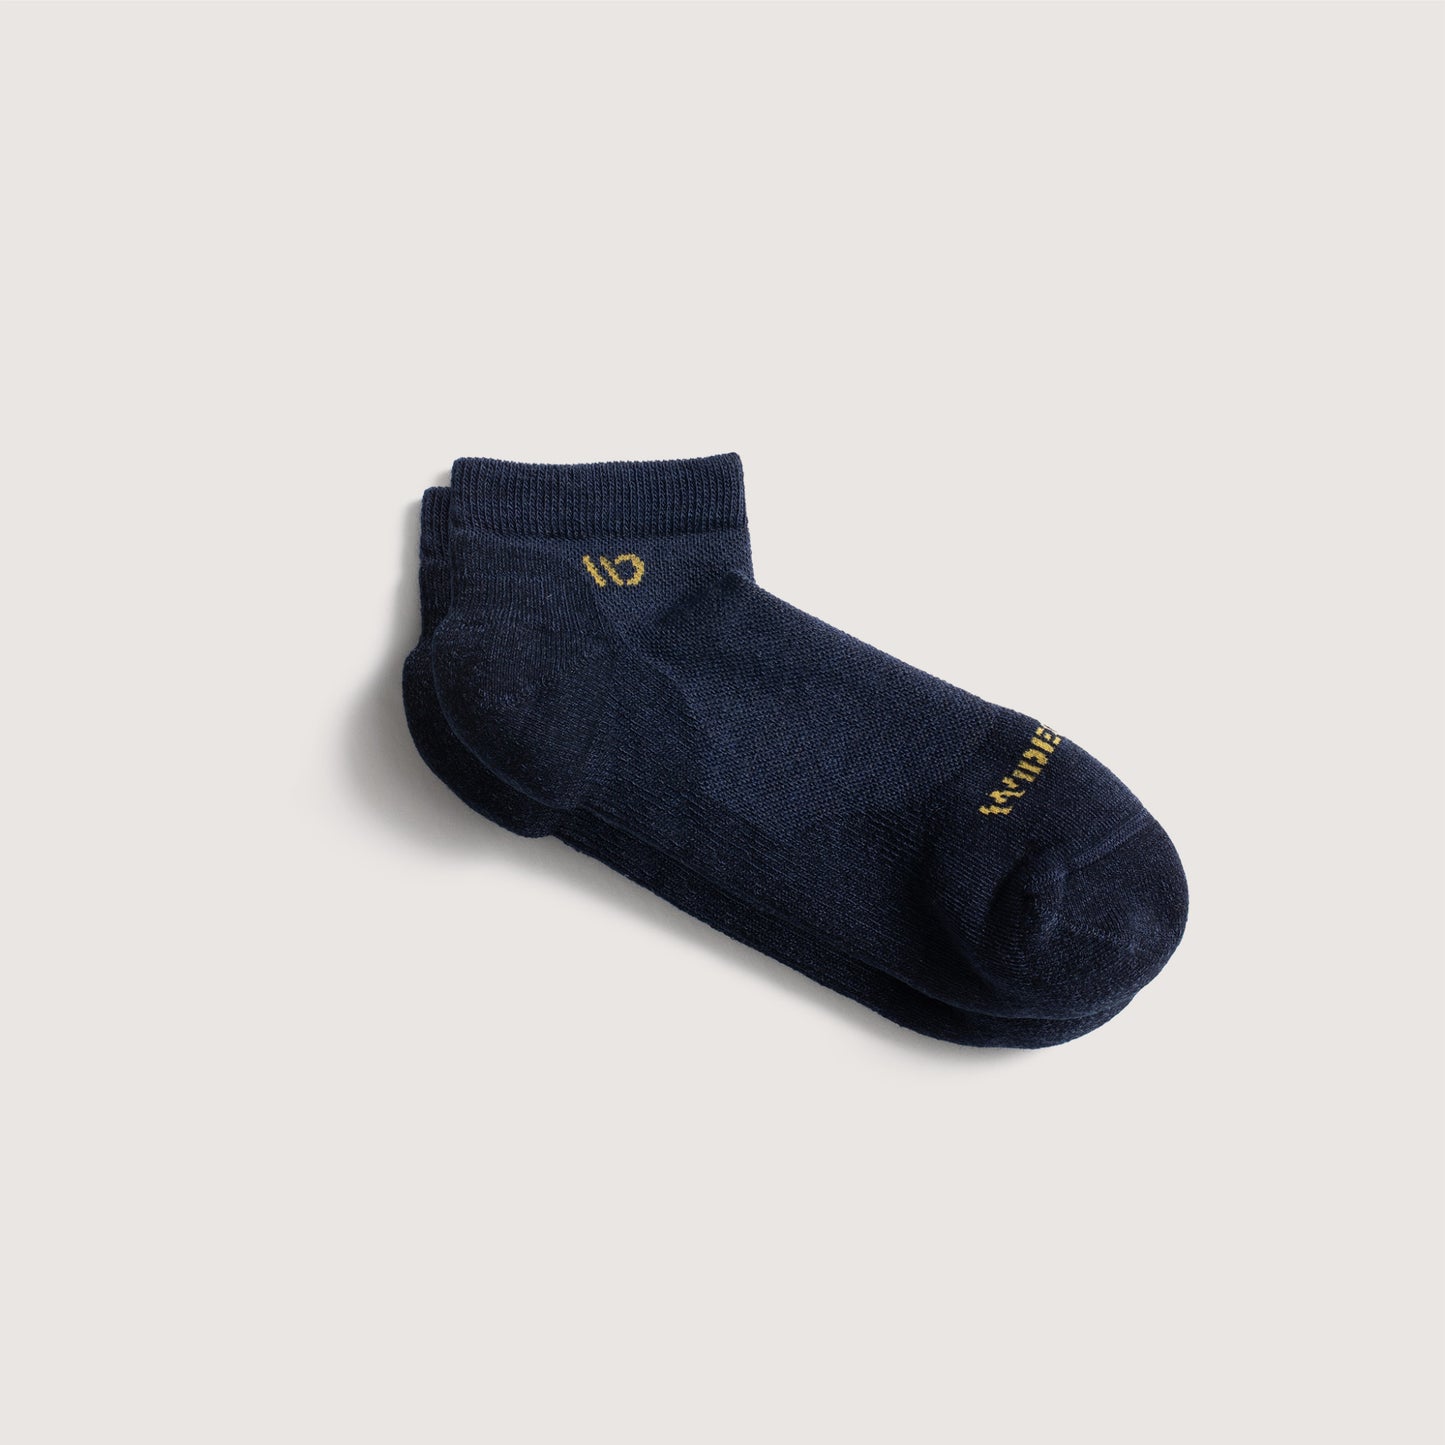 Flat socks, featuring Yellow logo, with denim body --Denim